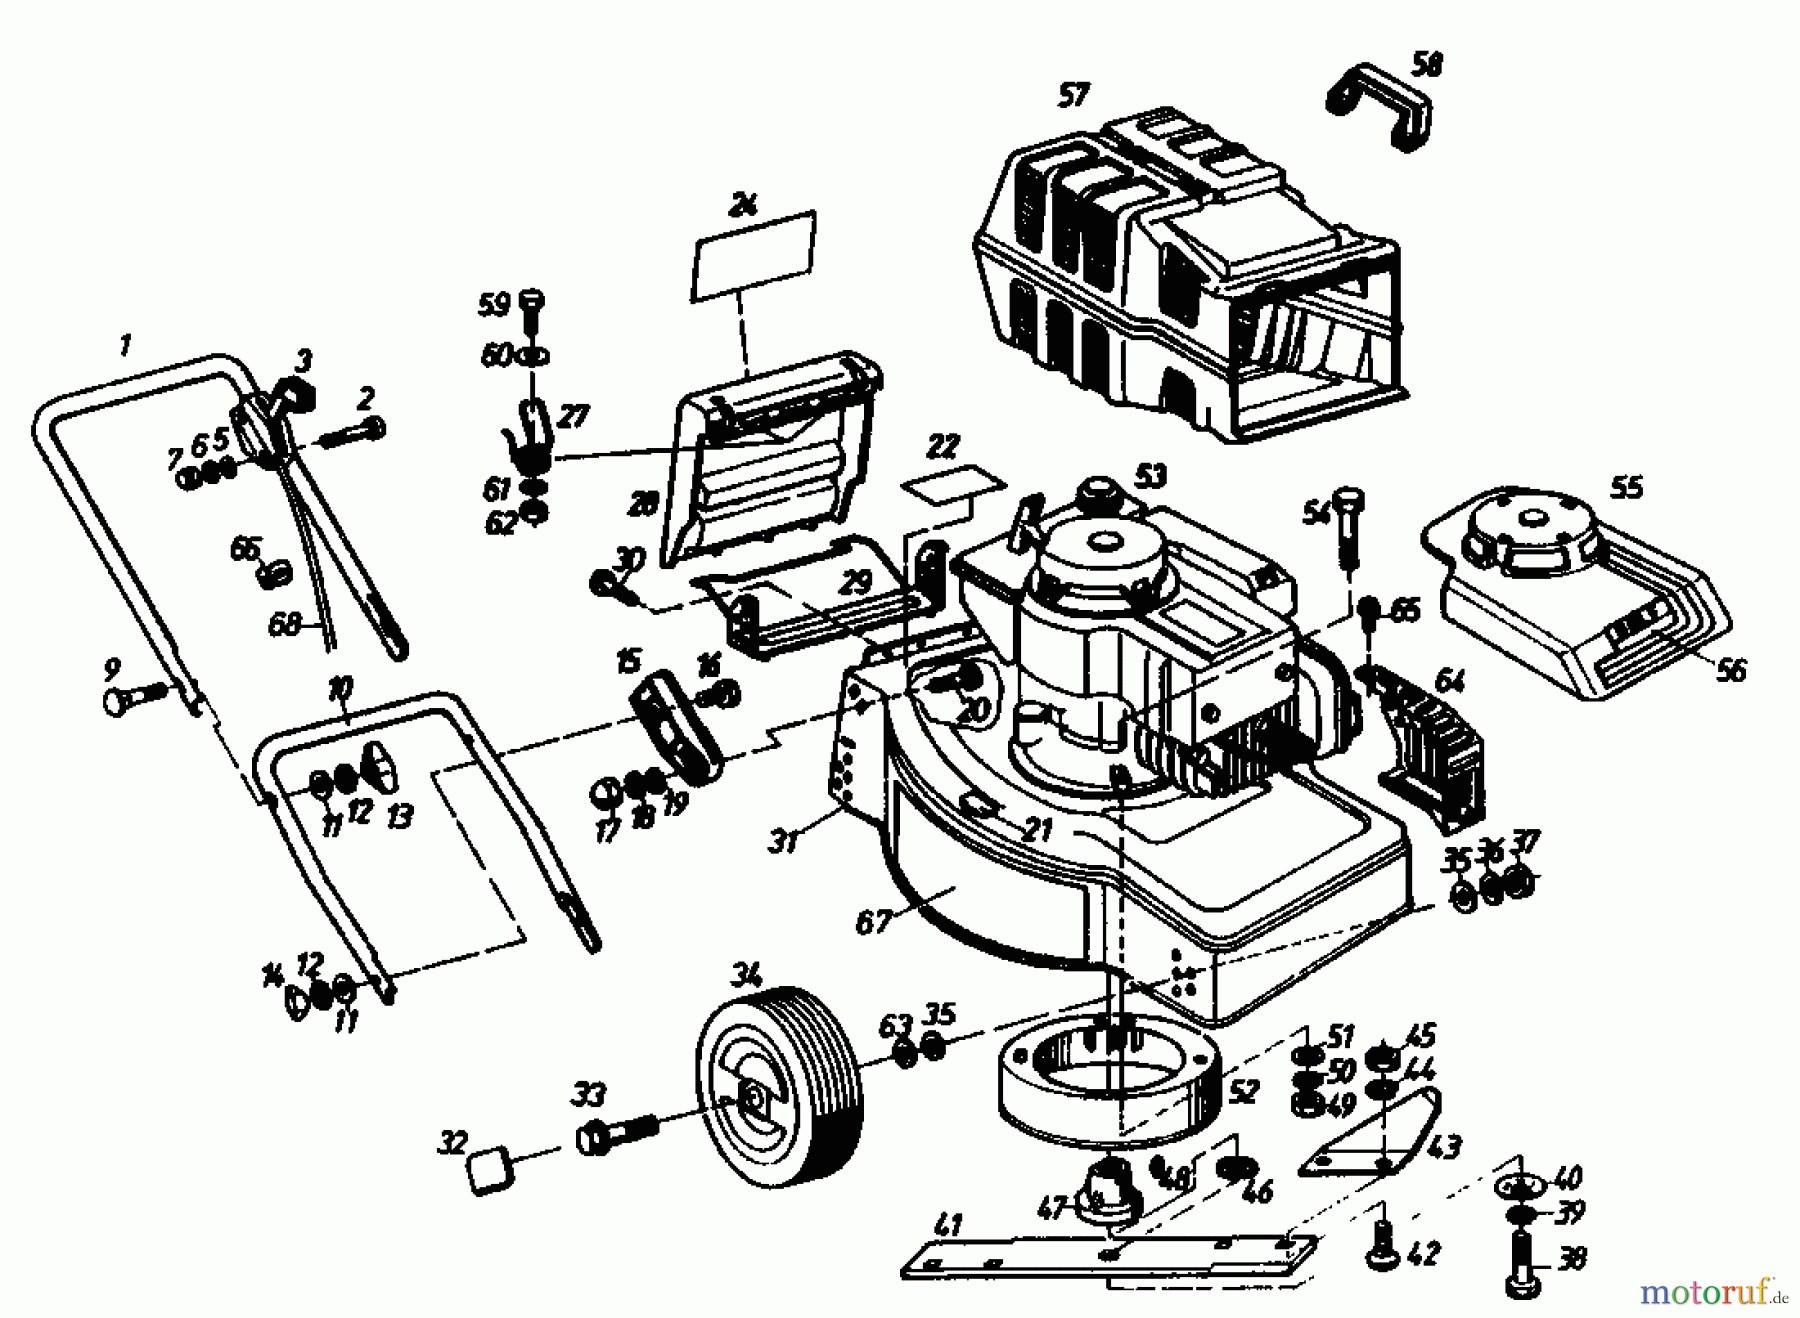  Golf Petrol mower 245 H 4 02874.07  (1986) Basic machine